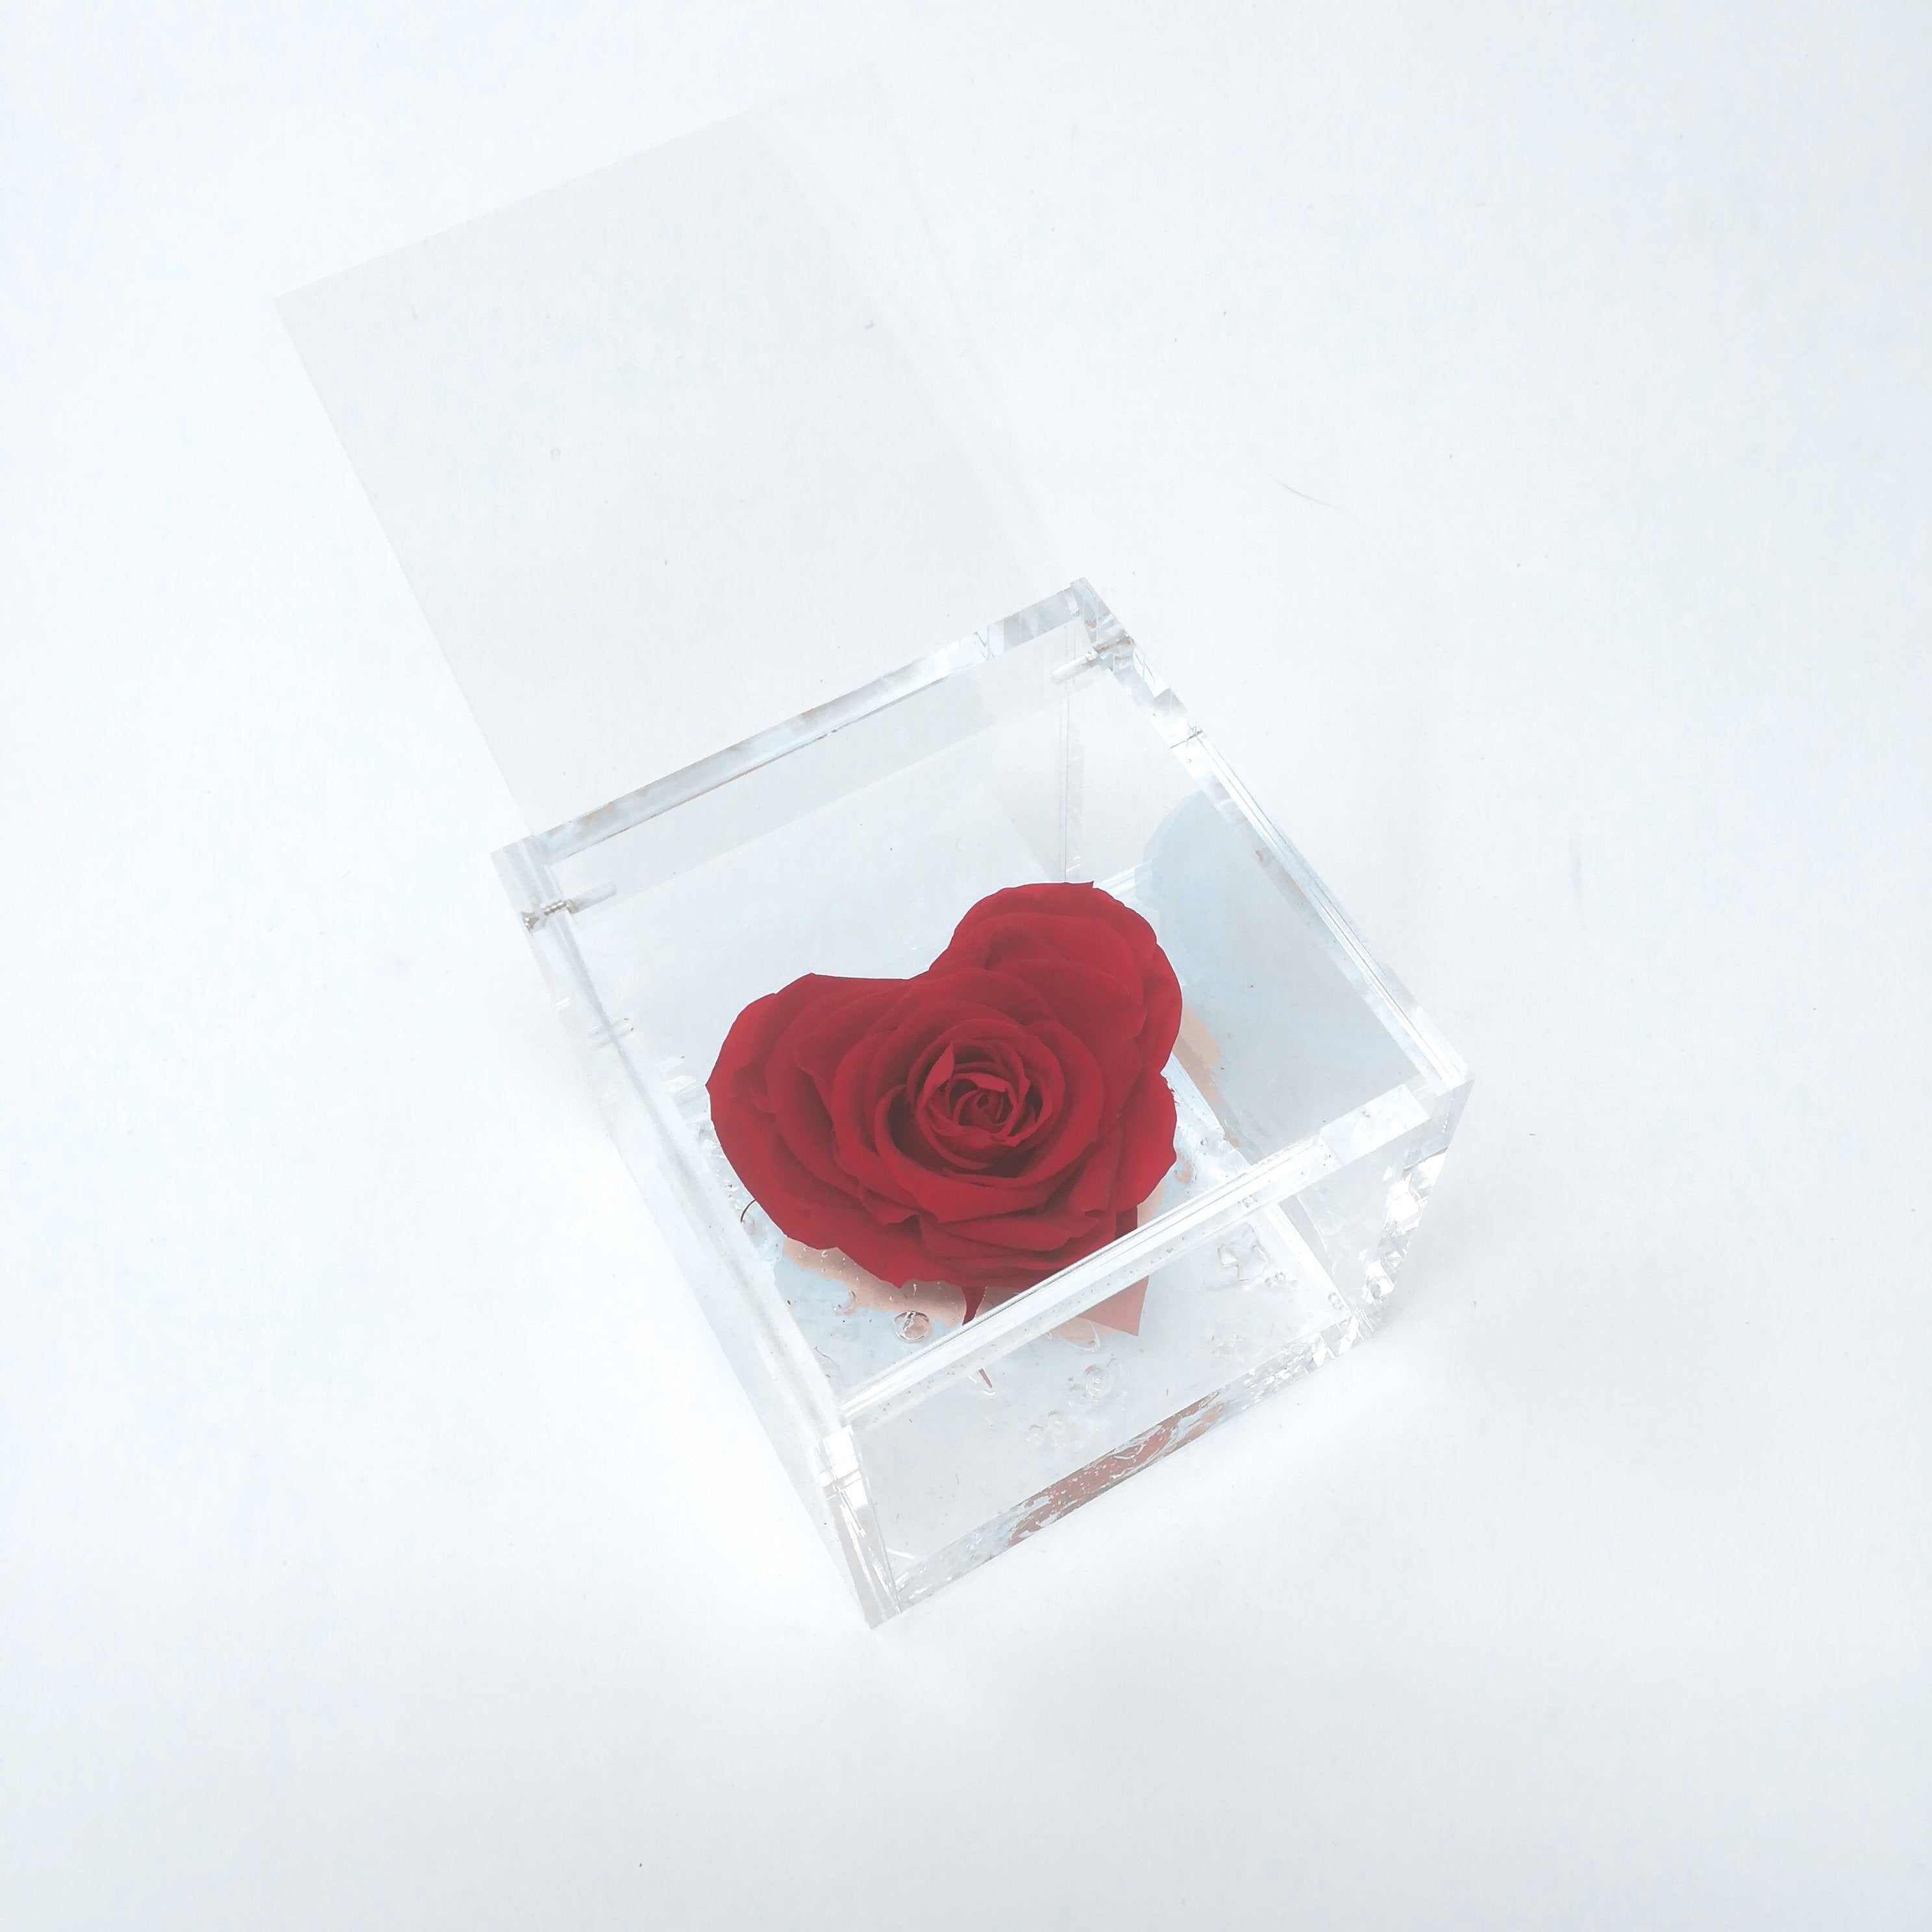 FLOWERCUBE ROSA CUORE 8x8 CM ROSSO Rose Stabilizzate Flower Cube